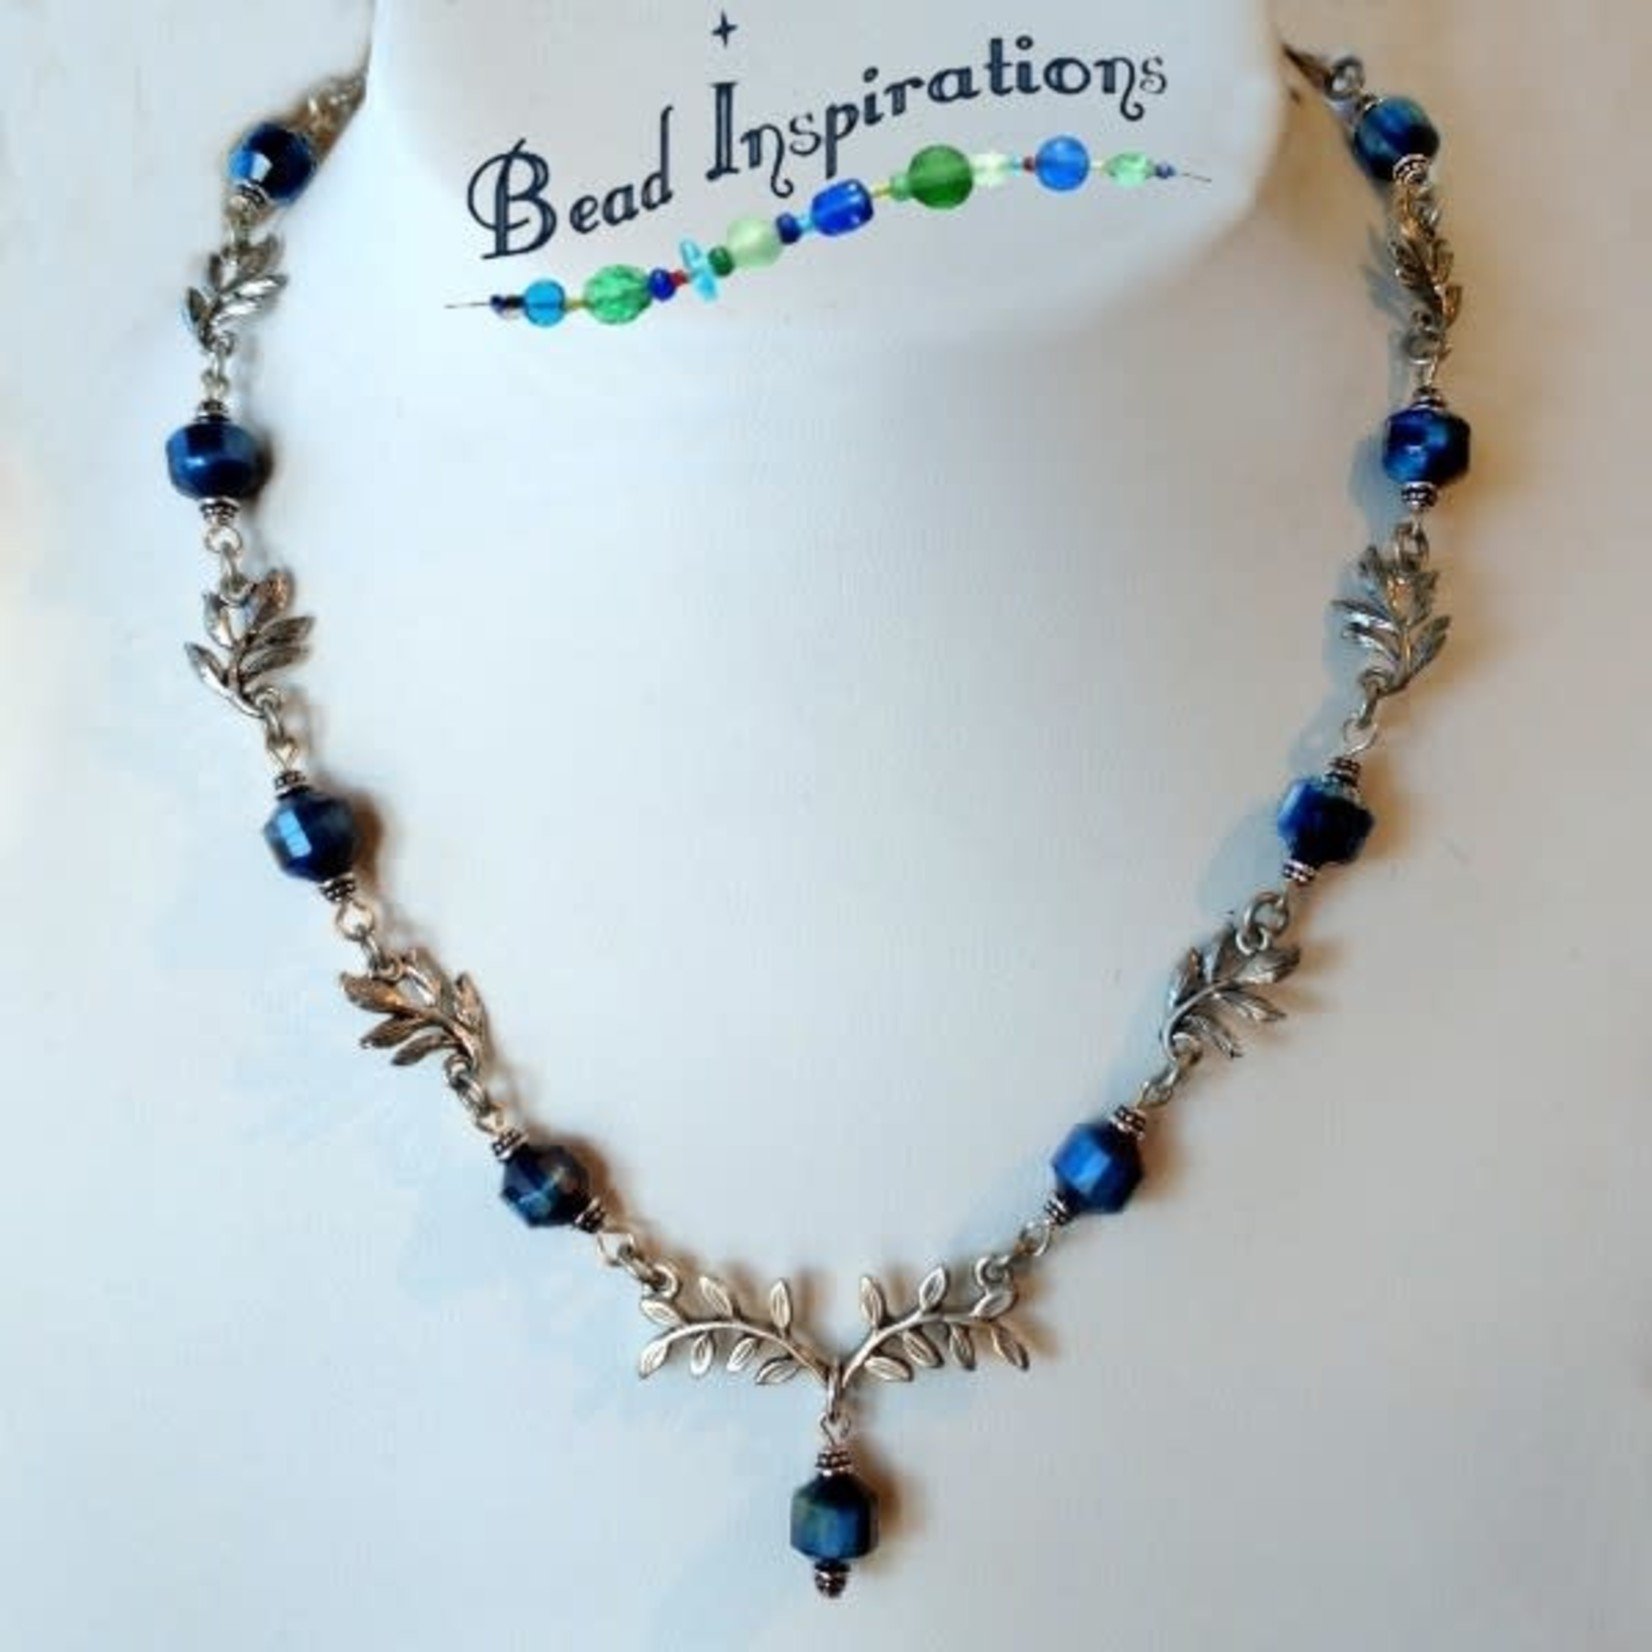 Turn a New Leaf - Leaf charm necklace